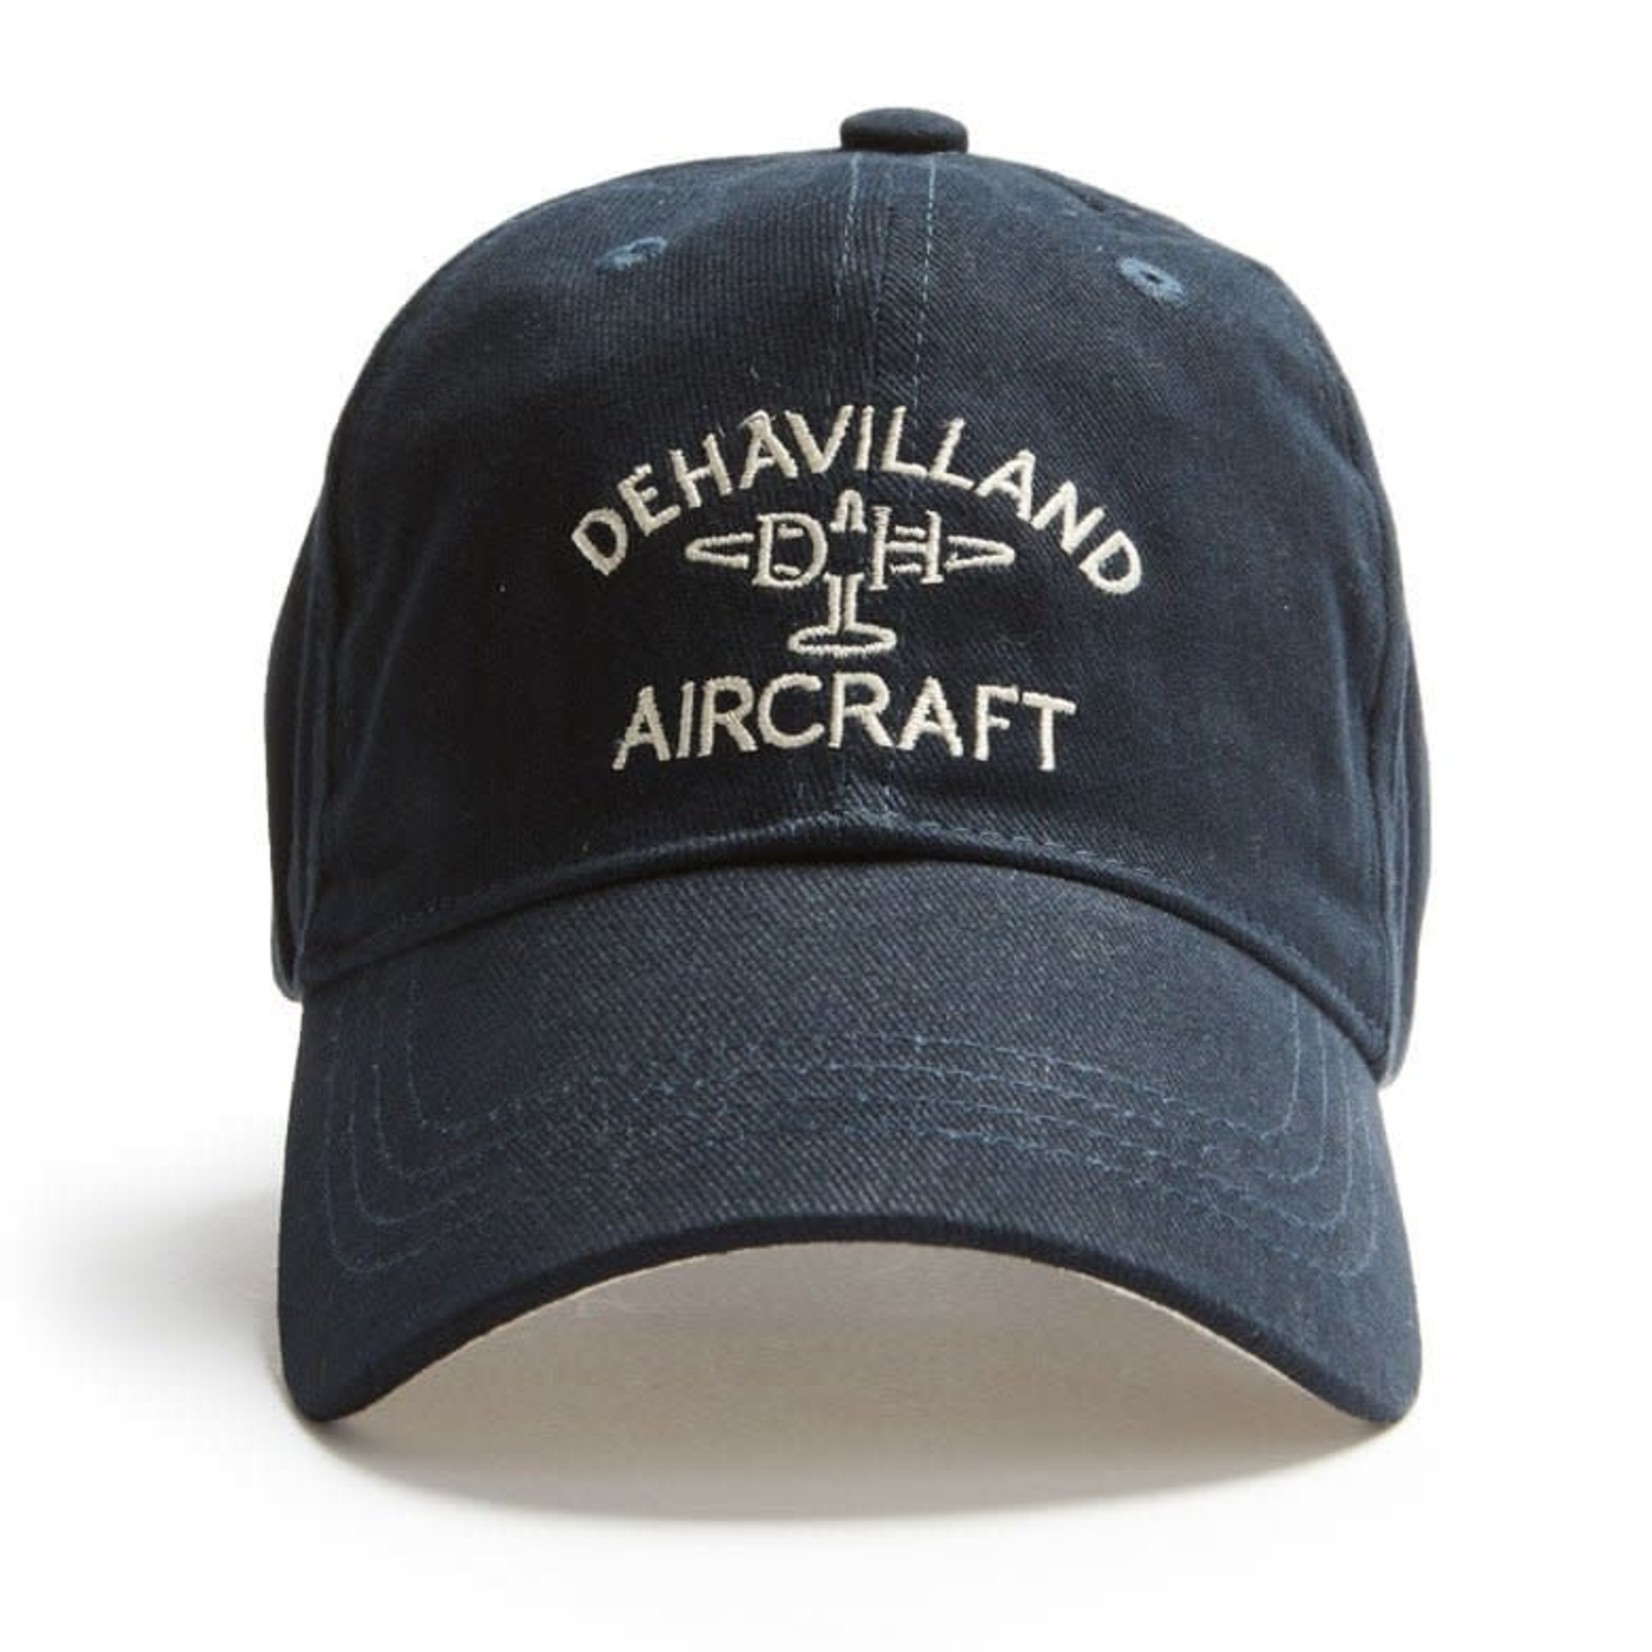 Aviation and Space Cap De Havilland Mosquito